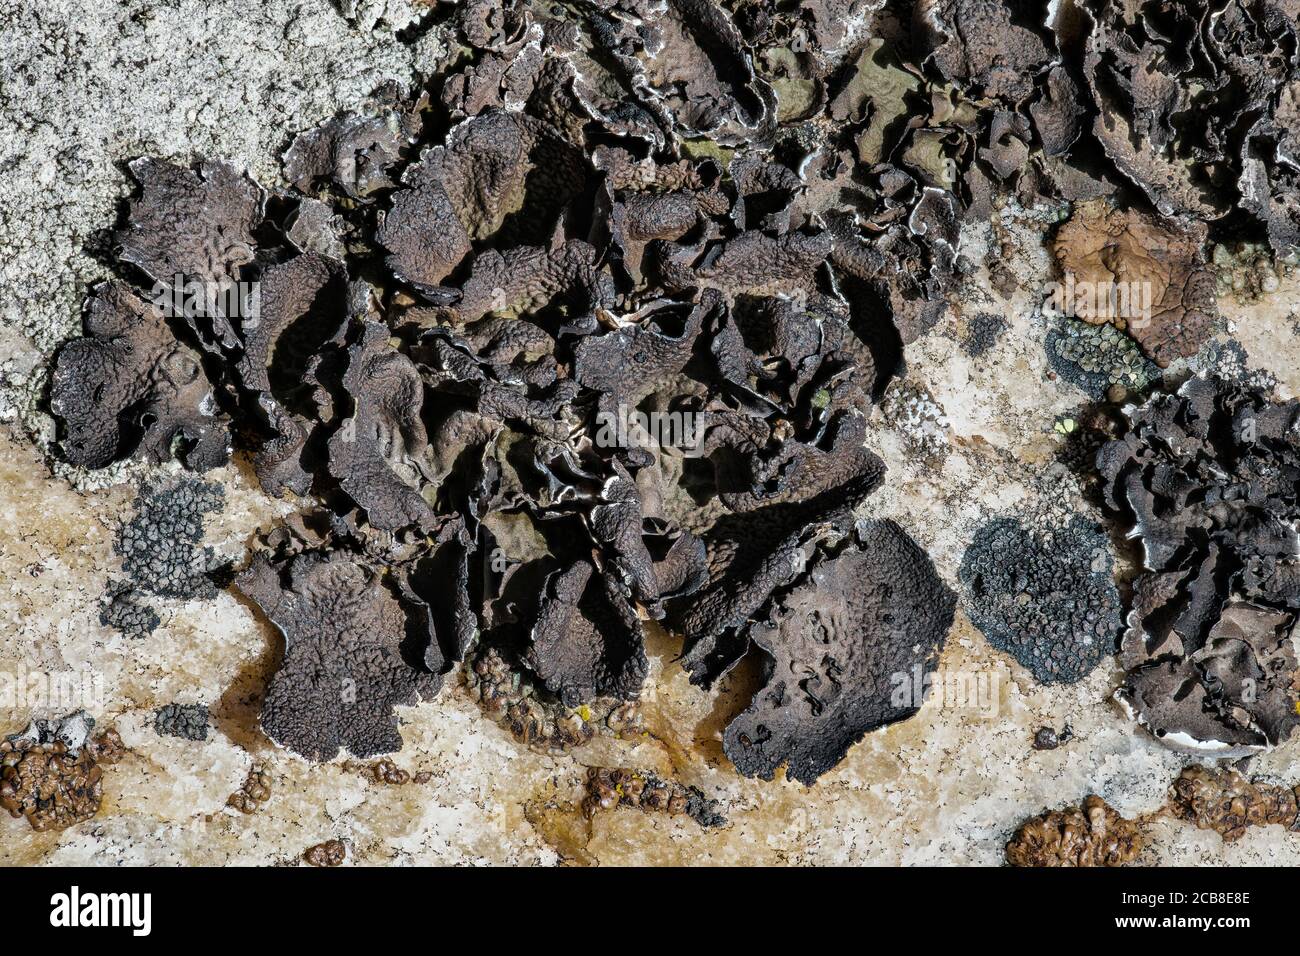 Rock Tripe Lichen (Umbilicaria hyperborea) Stock Photo